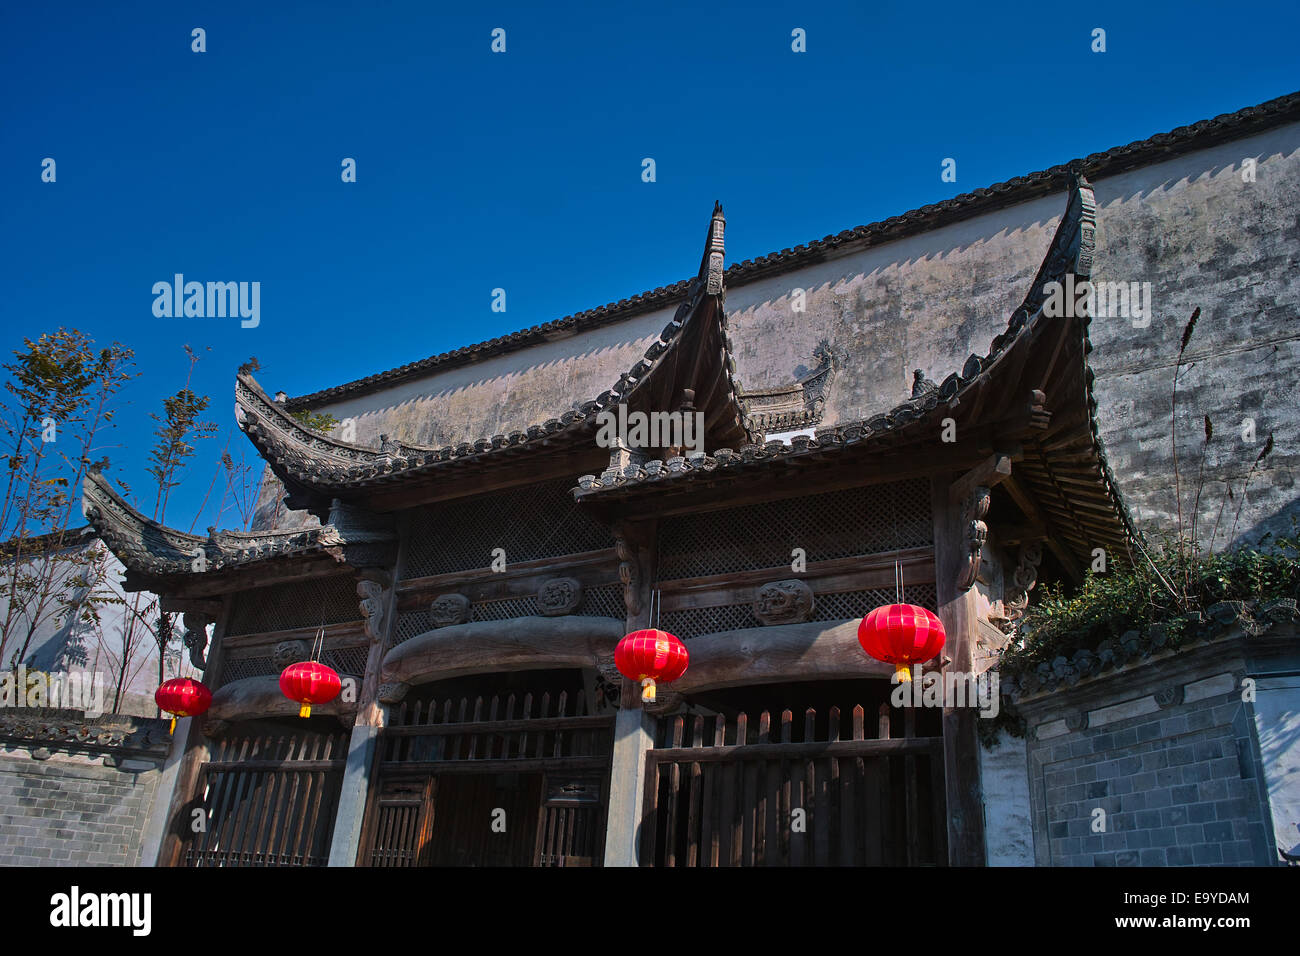 Anhui Xidi architectural features Stock Photo